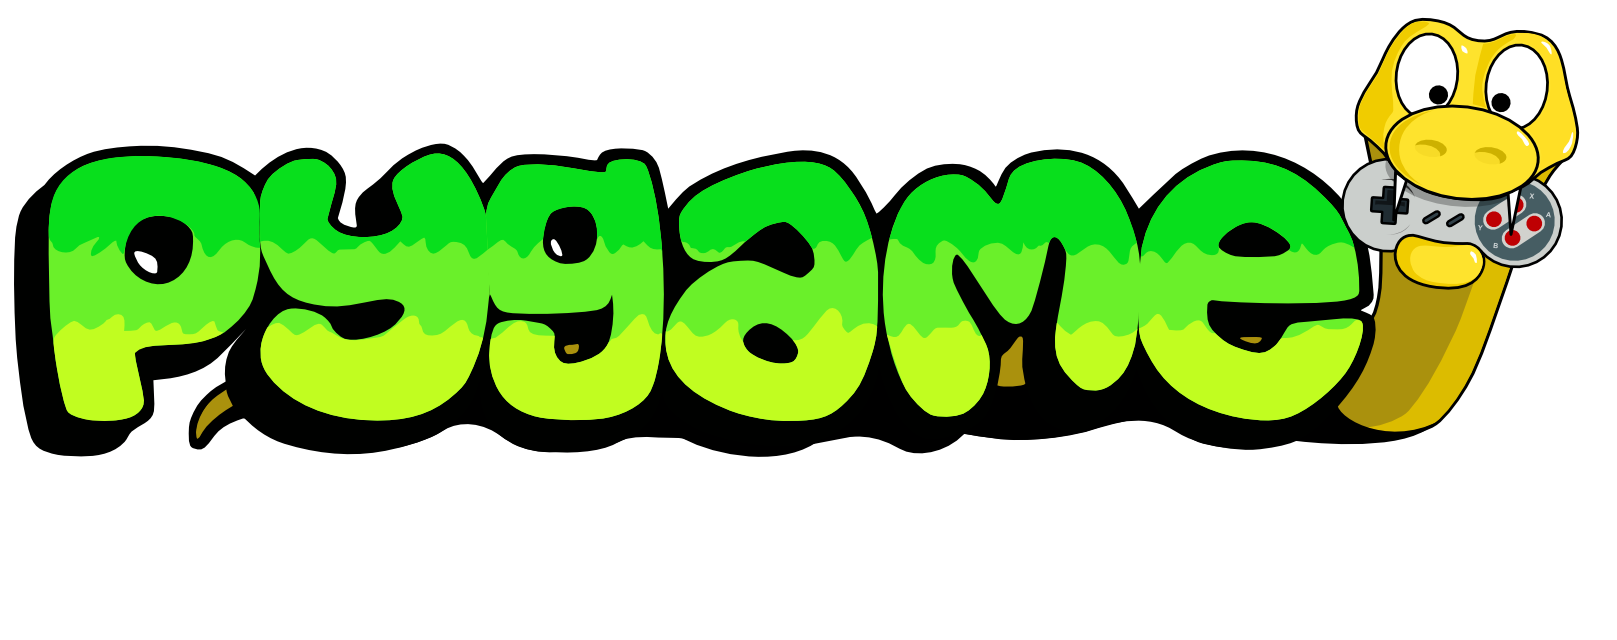 Игры на библиотеке pygame. Pygame. Картинки для Pygame. Библиотека Pygame Python. Pygame логотип.